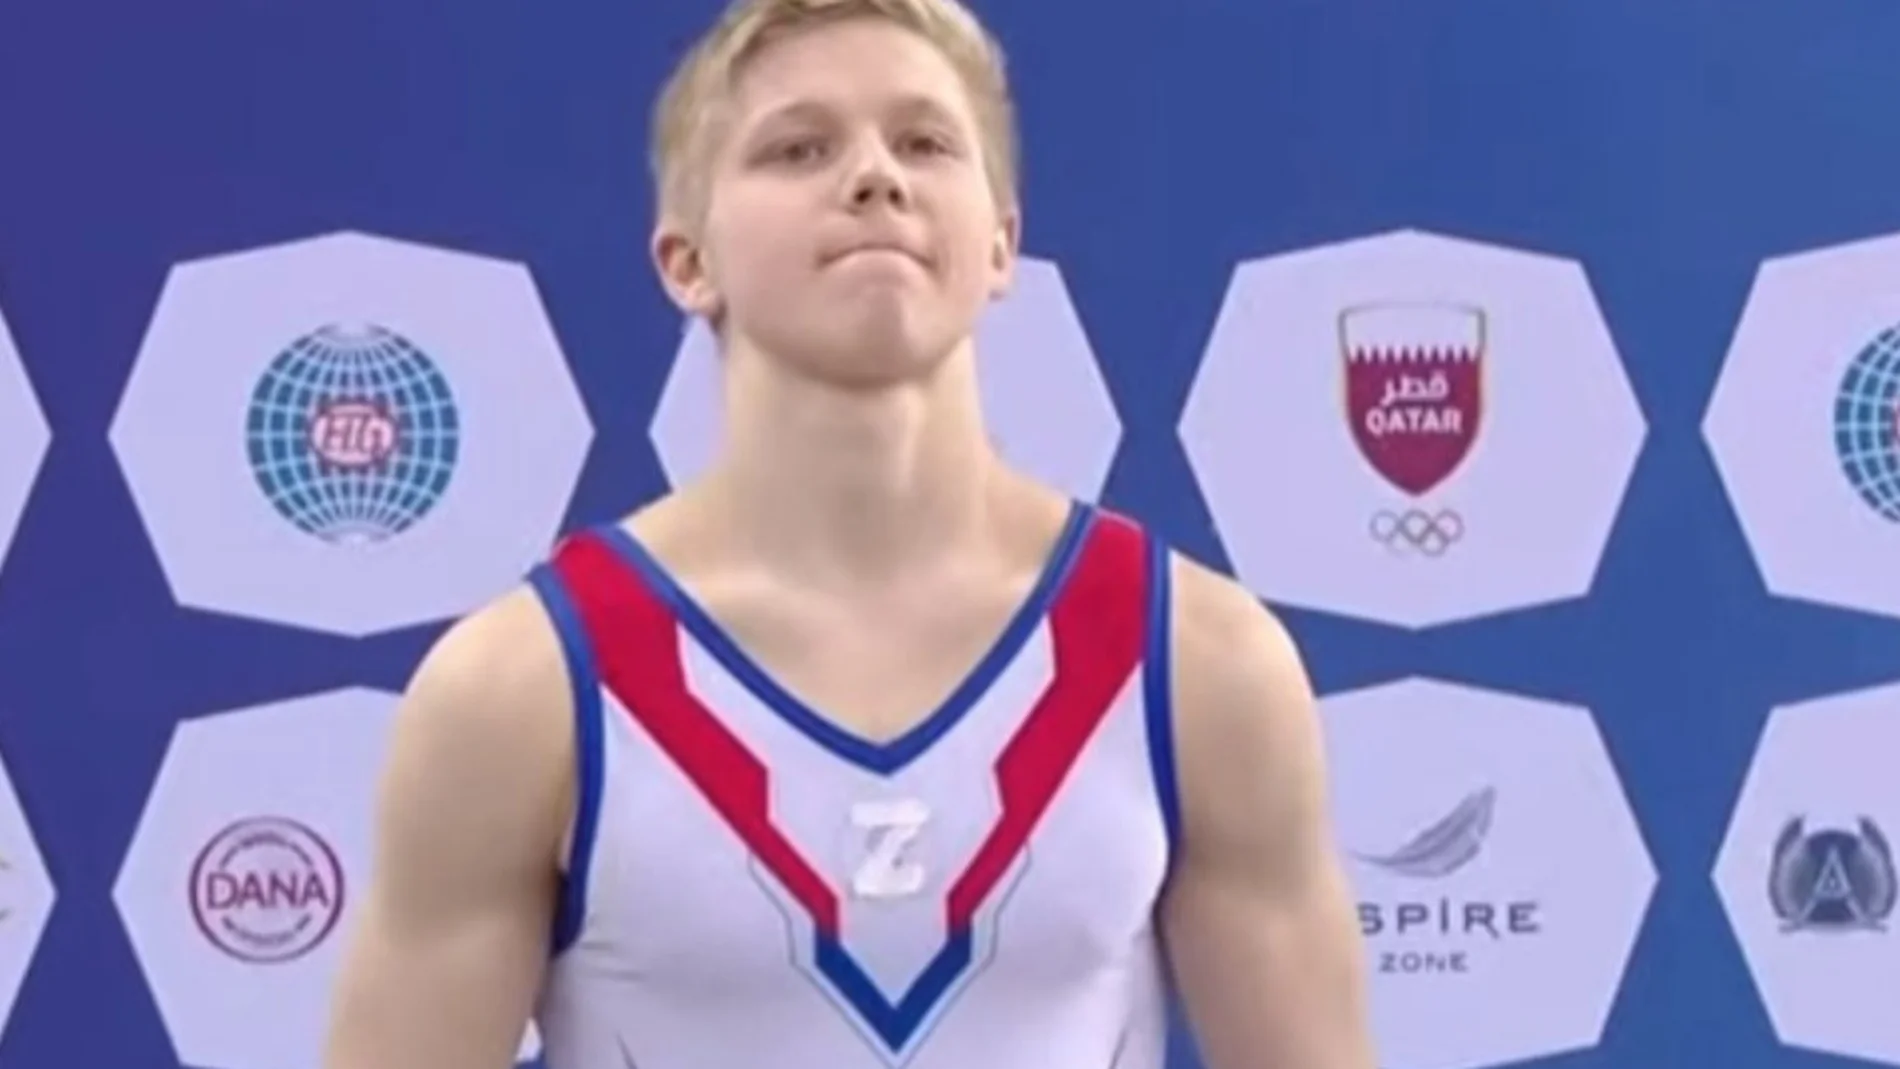 Ivan Kuliak, gimnasta ruso, luce la 'Z' de los tanques rusos en el podio junto a un ucraniano